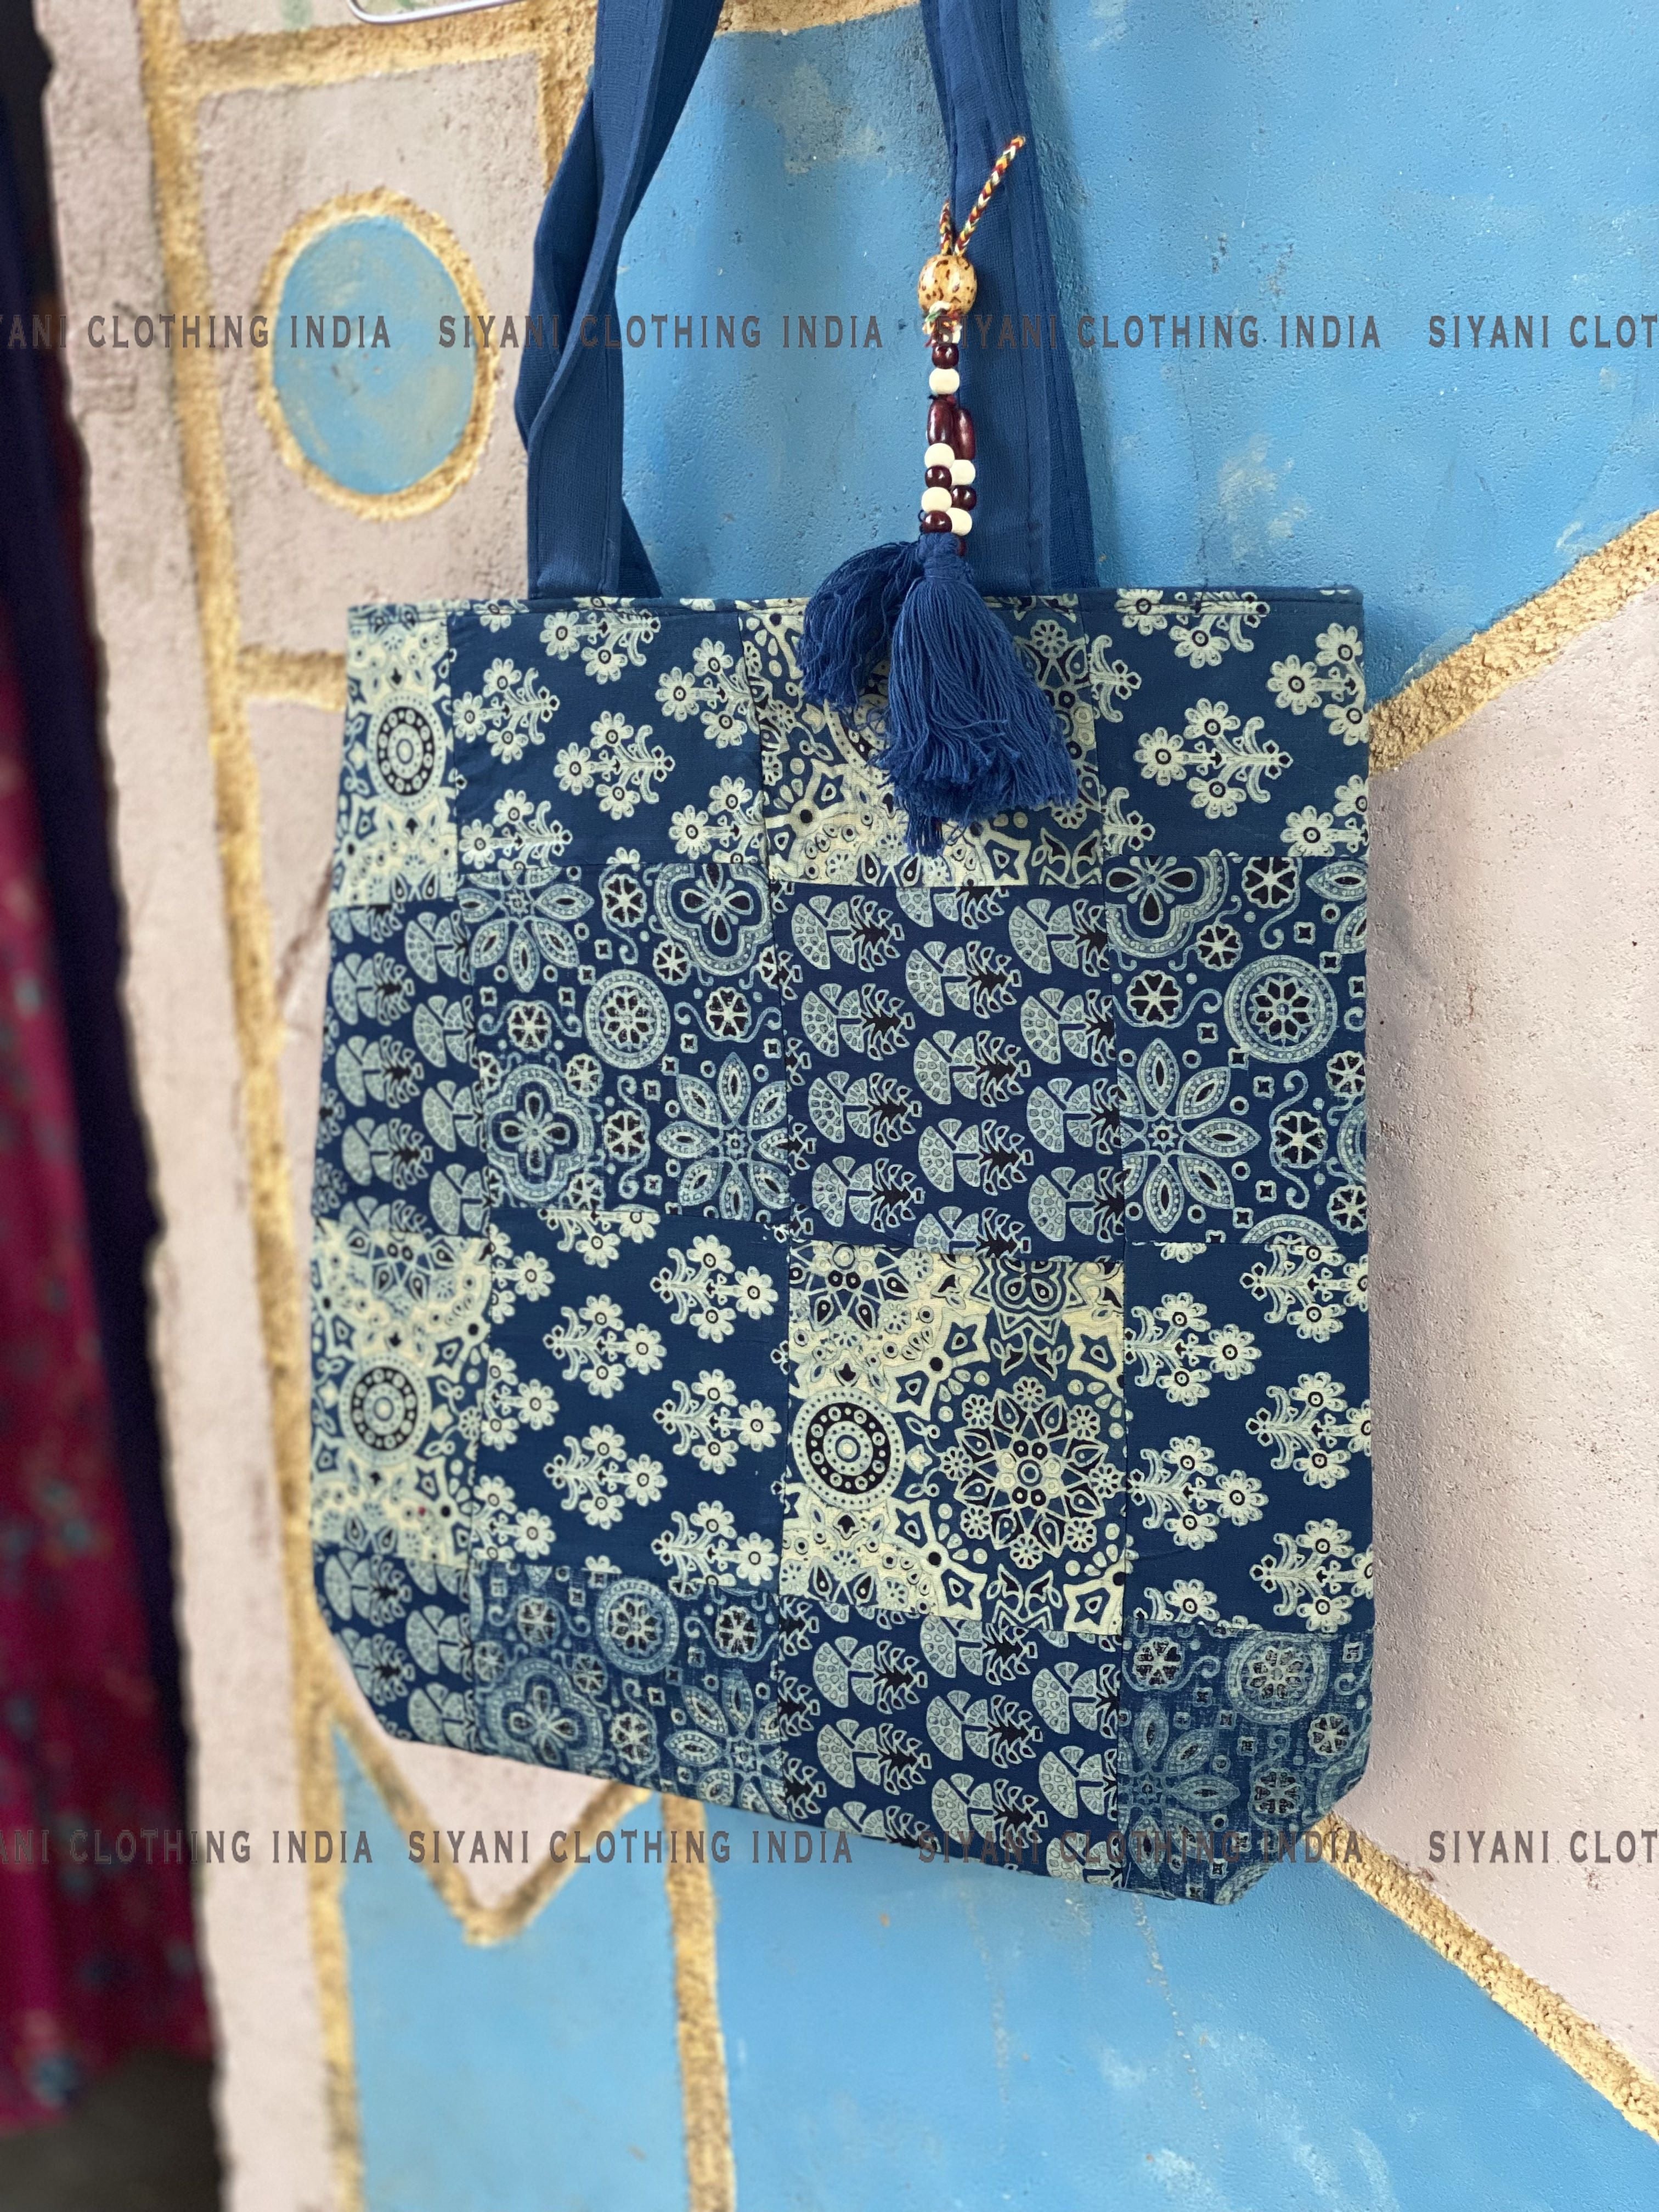 Saddle blanket bag with fringe | Leather bags handmade, Western purses,  Blanket purse